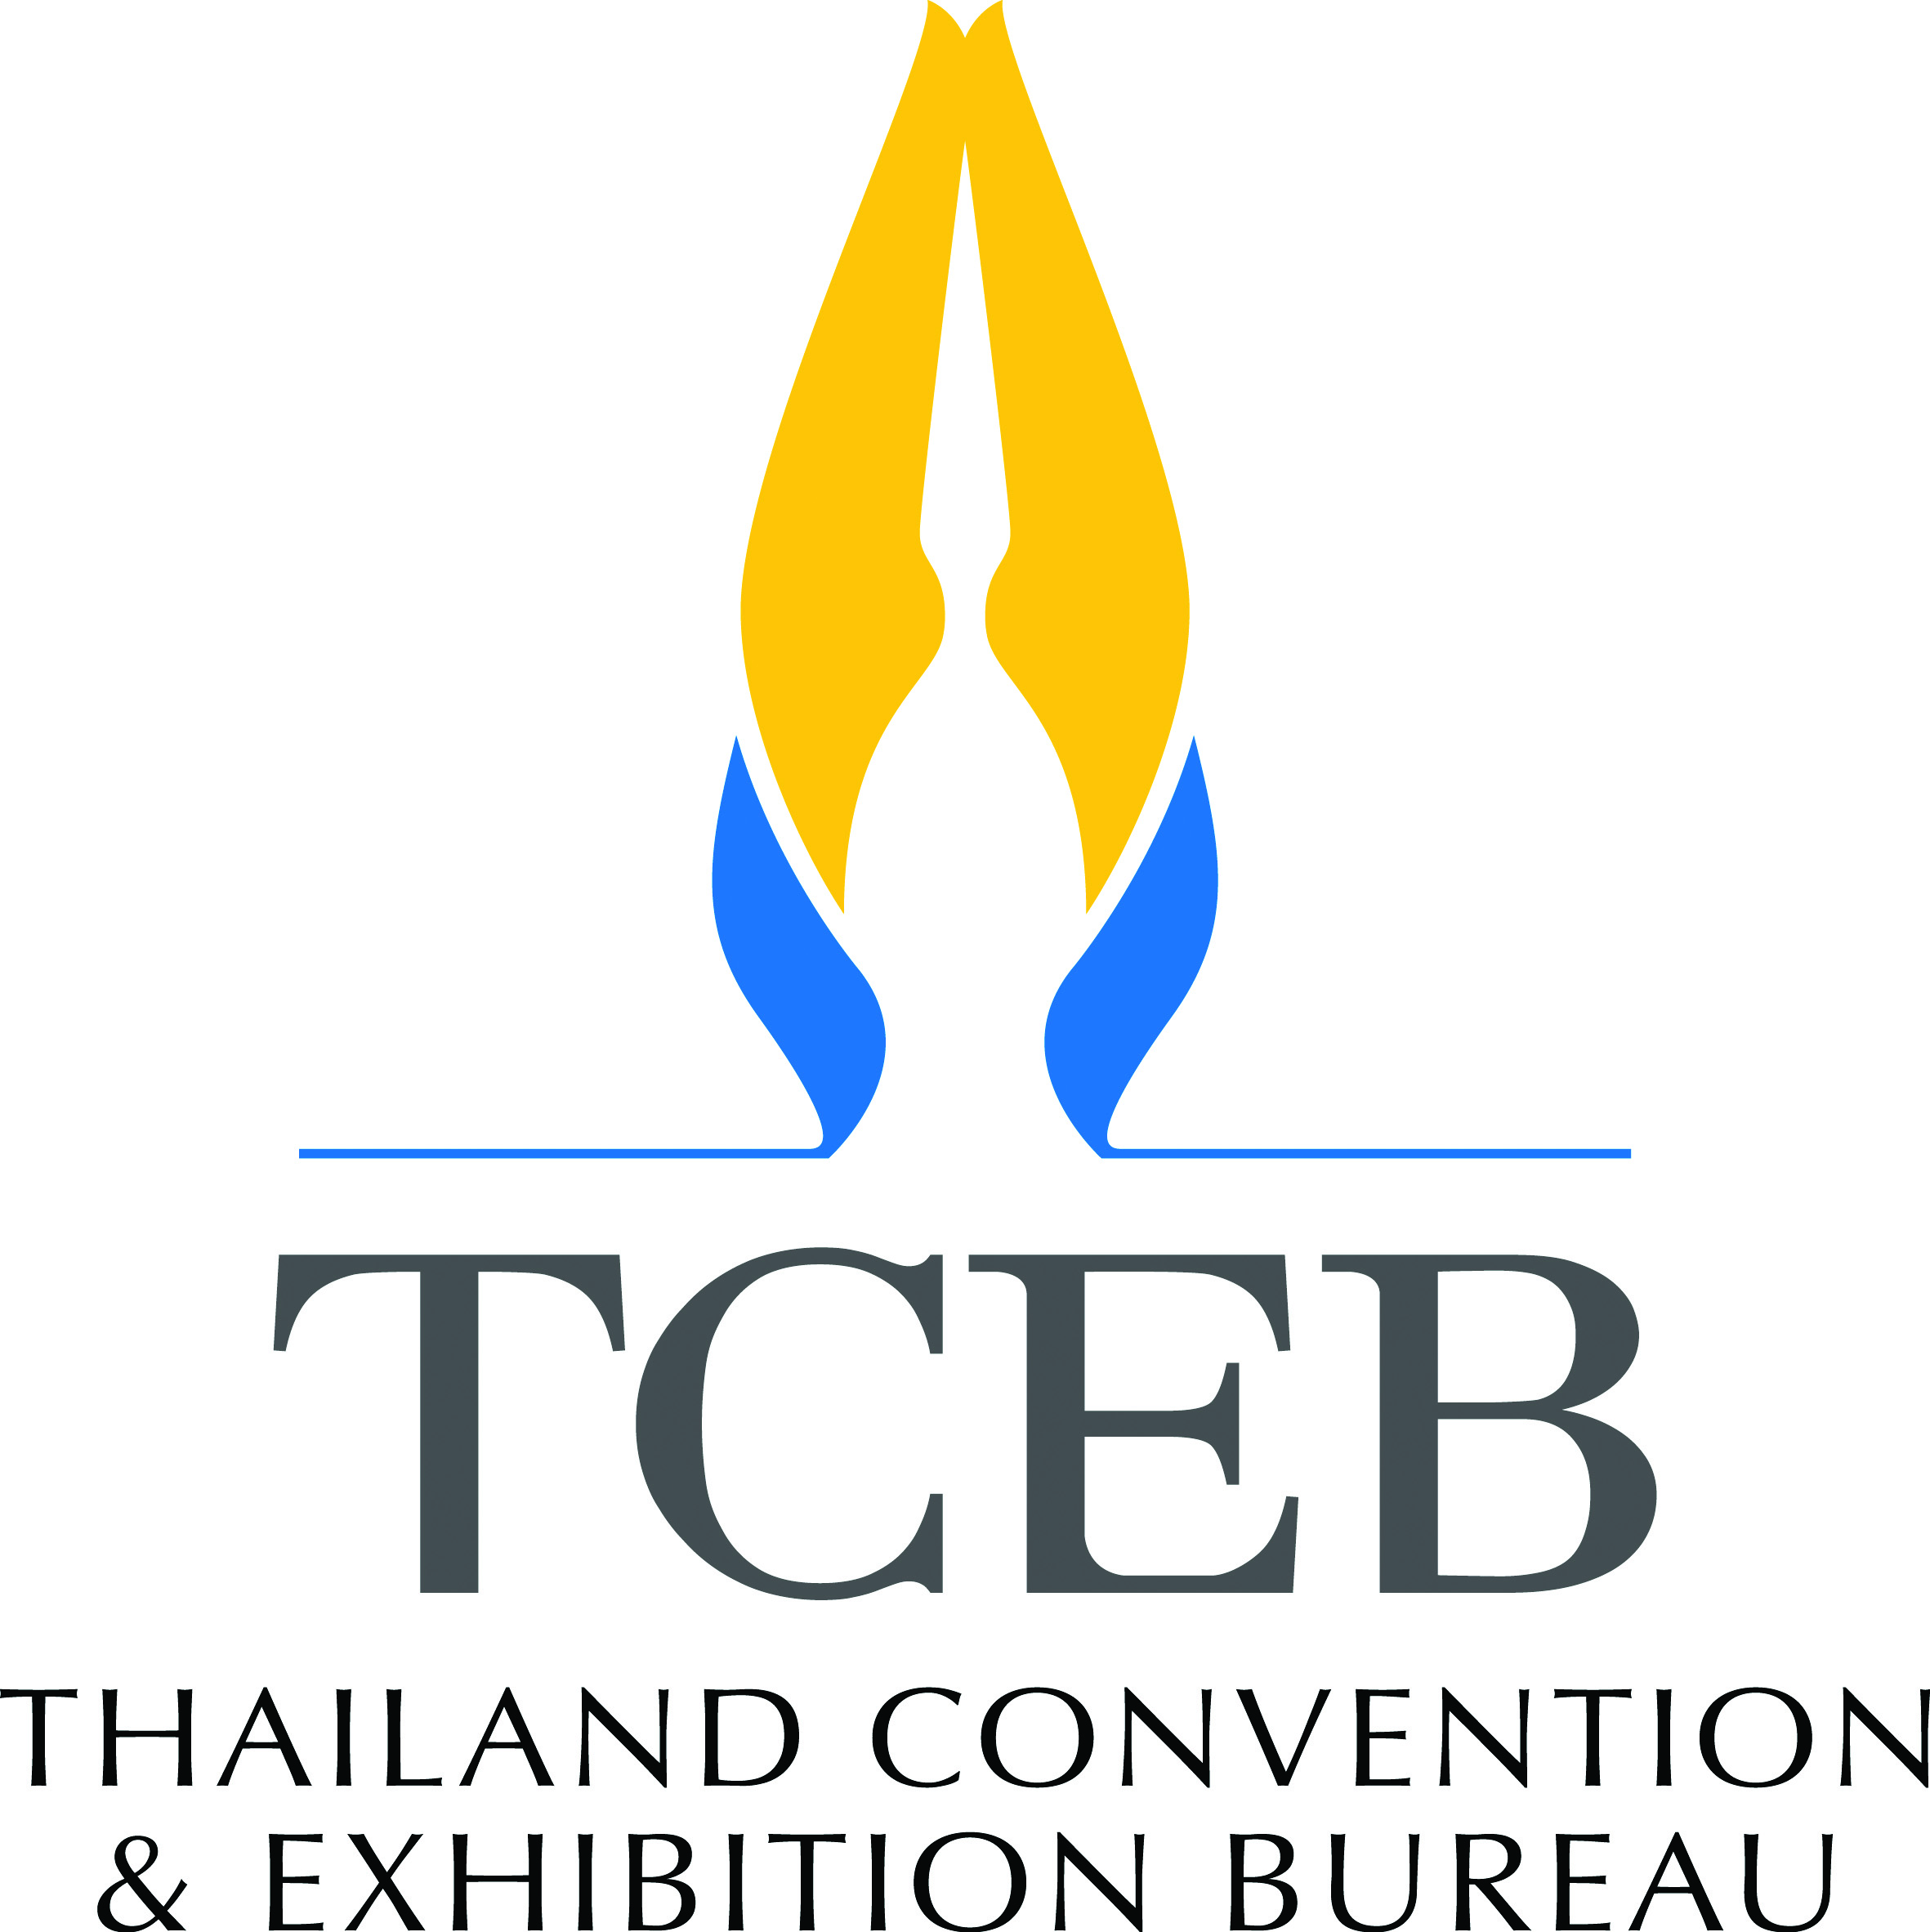 Exhibition industry in Thailand posts strong rebound